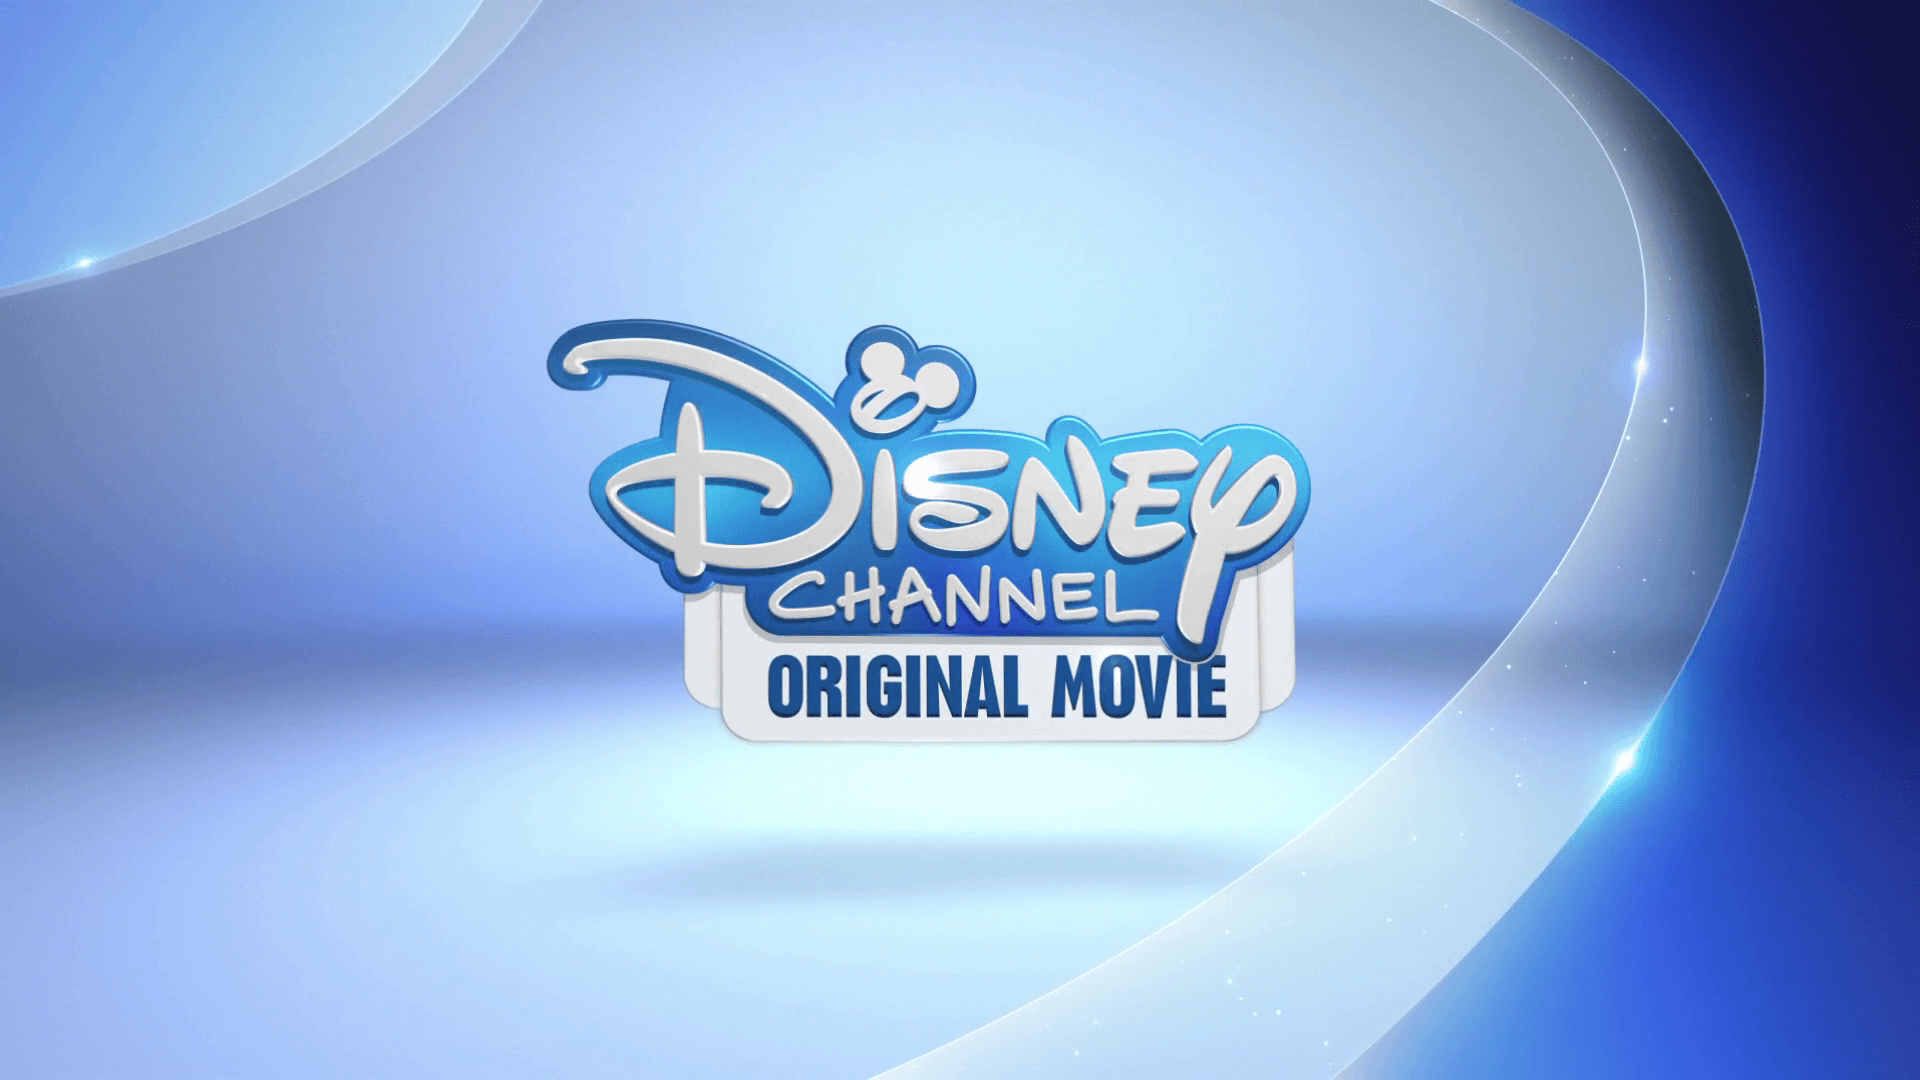 Disney Channel Movie Logo - Disney Channel Original Movie 2014.png